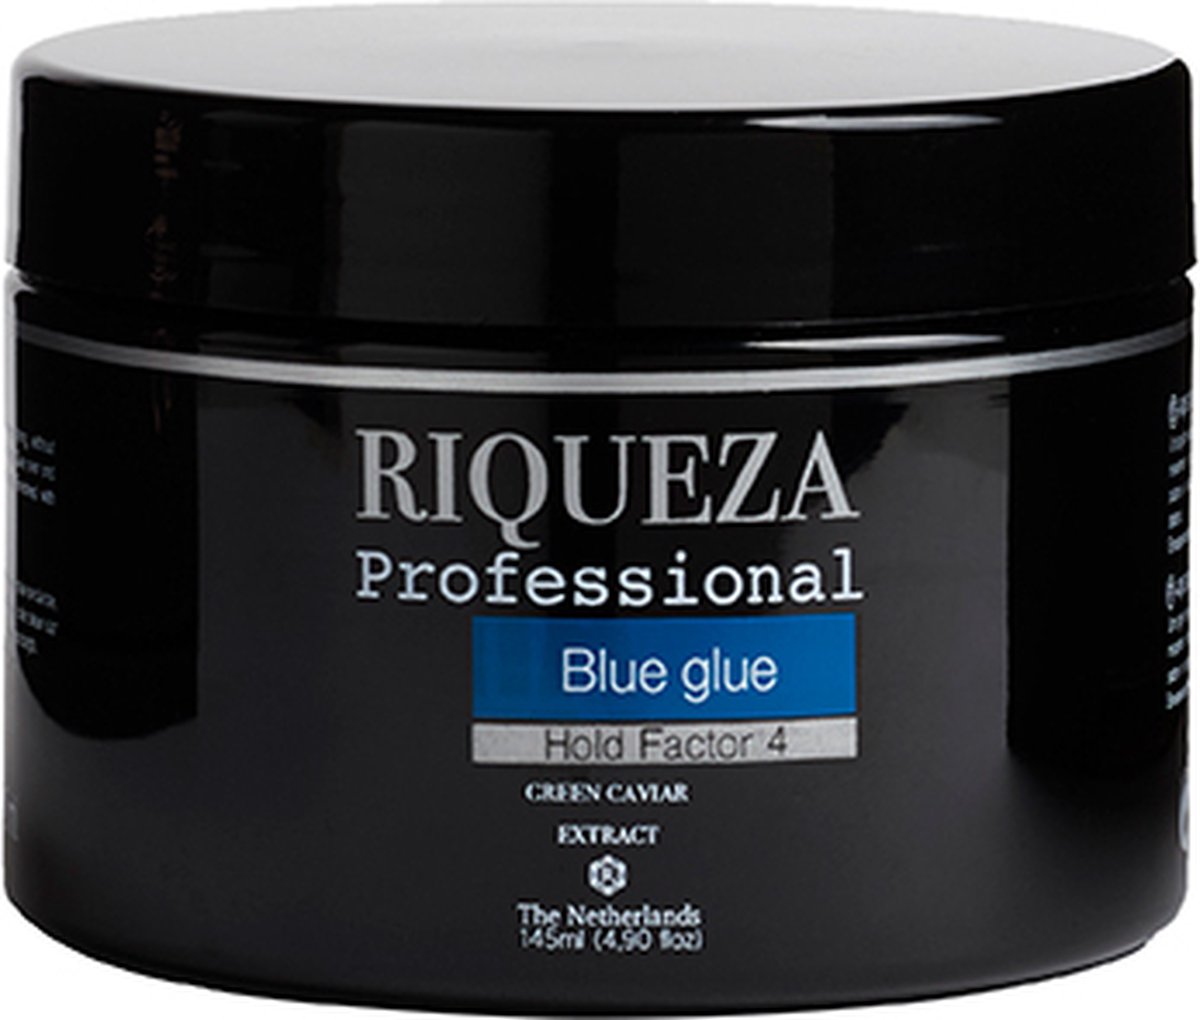 Riqueza Blue glue